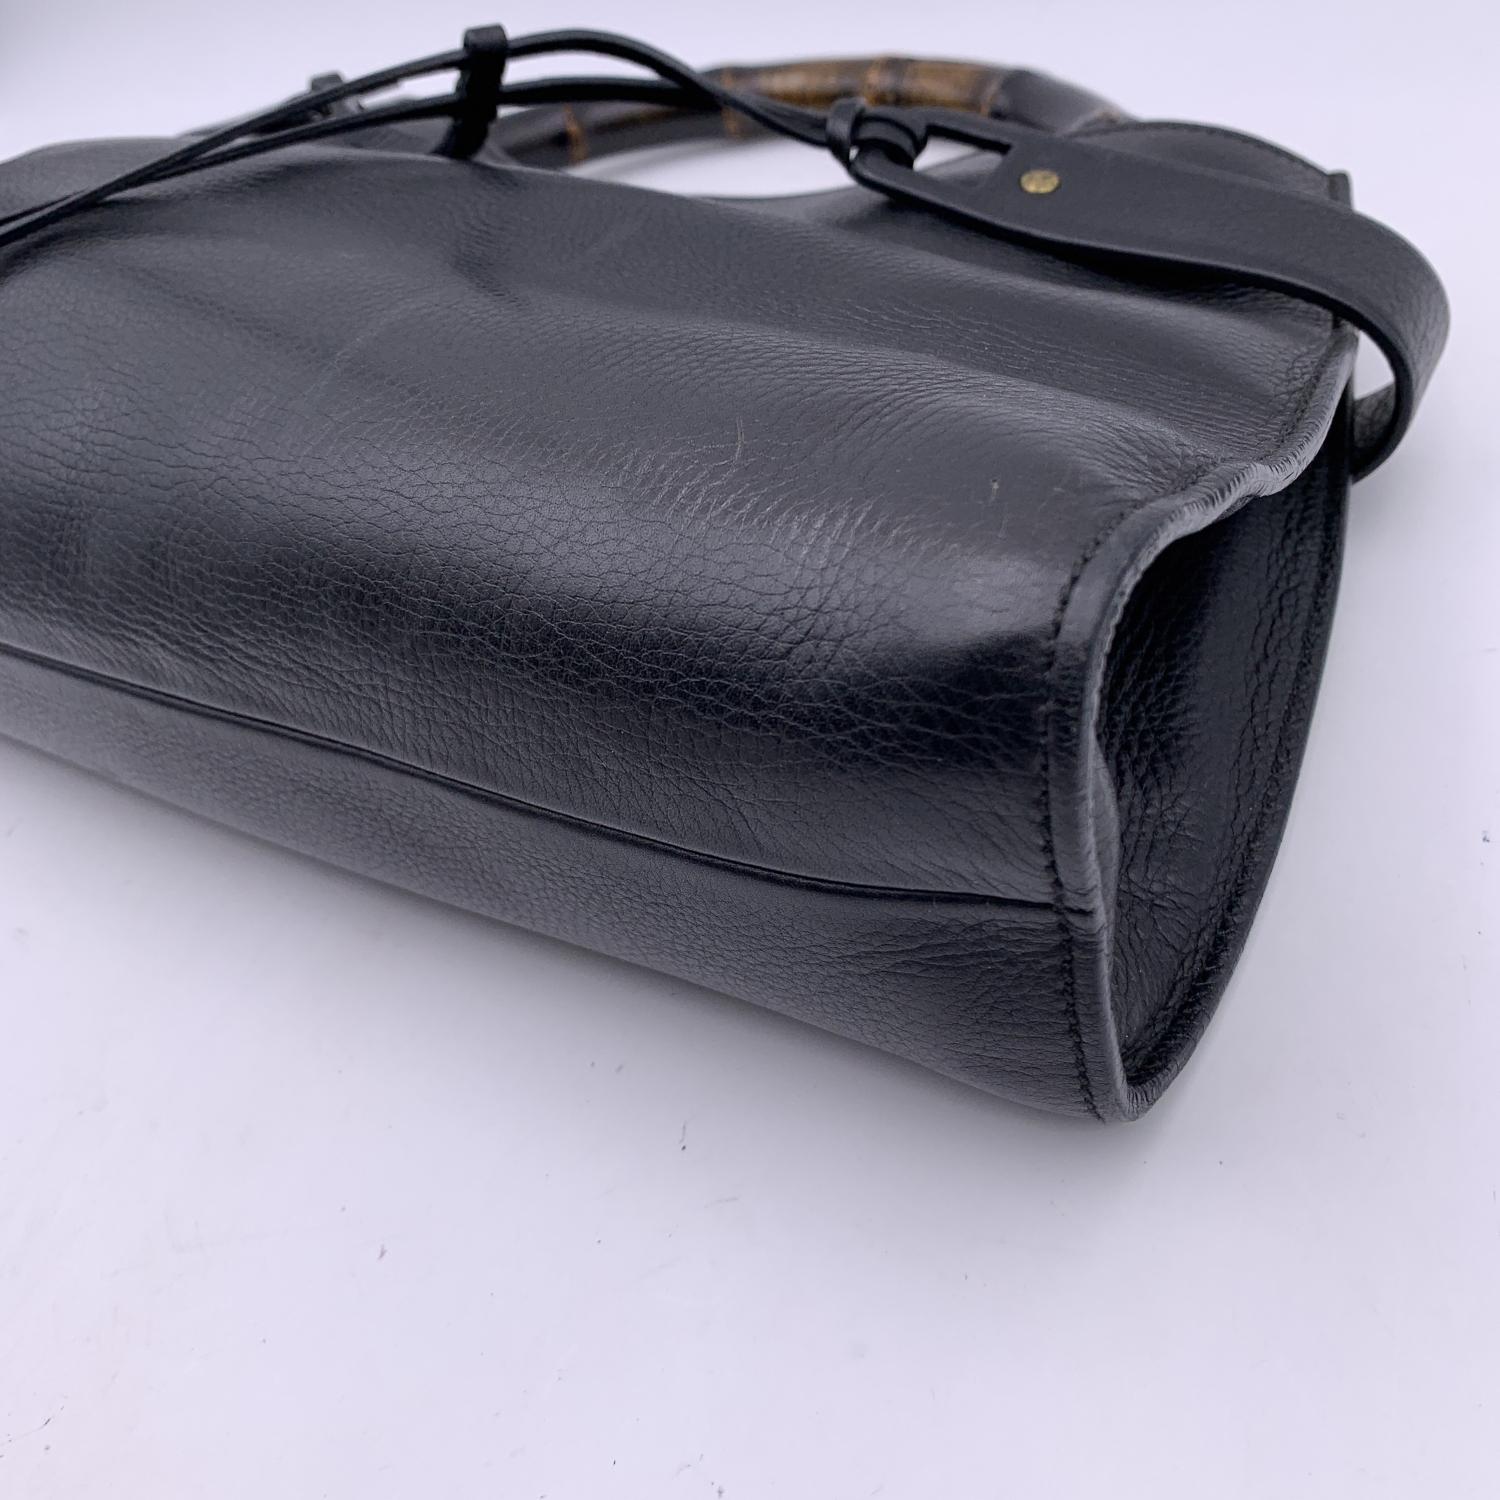 Gucci Black Leather Bamboo Tote Bag Handbag Satchel 7